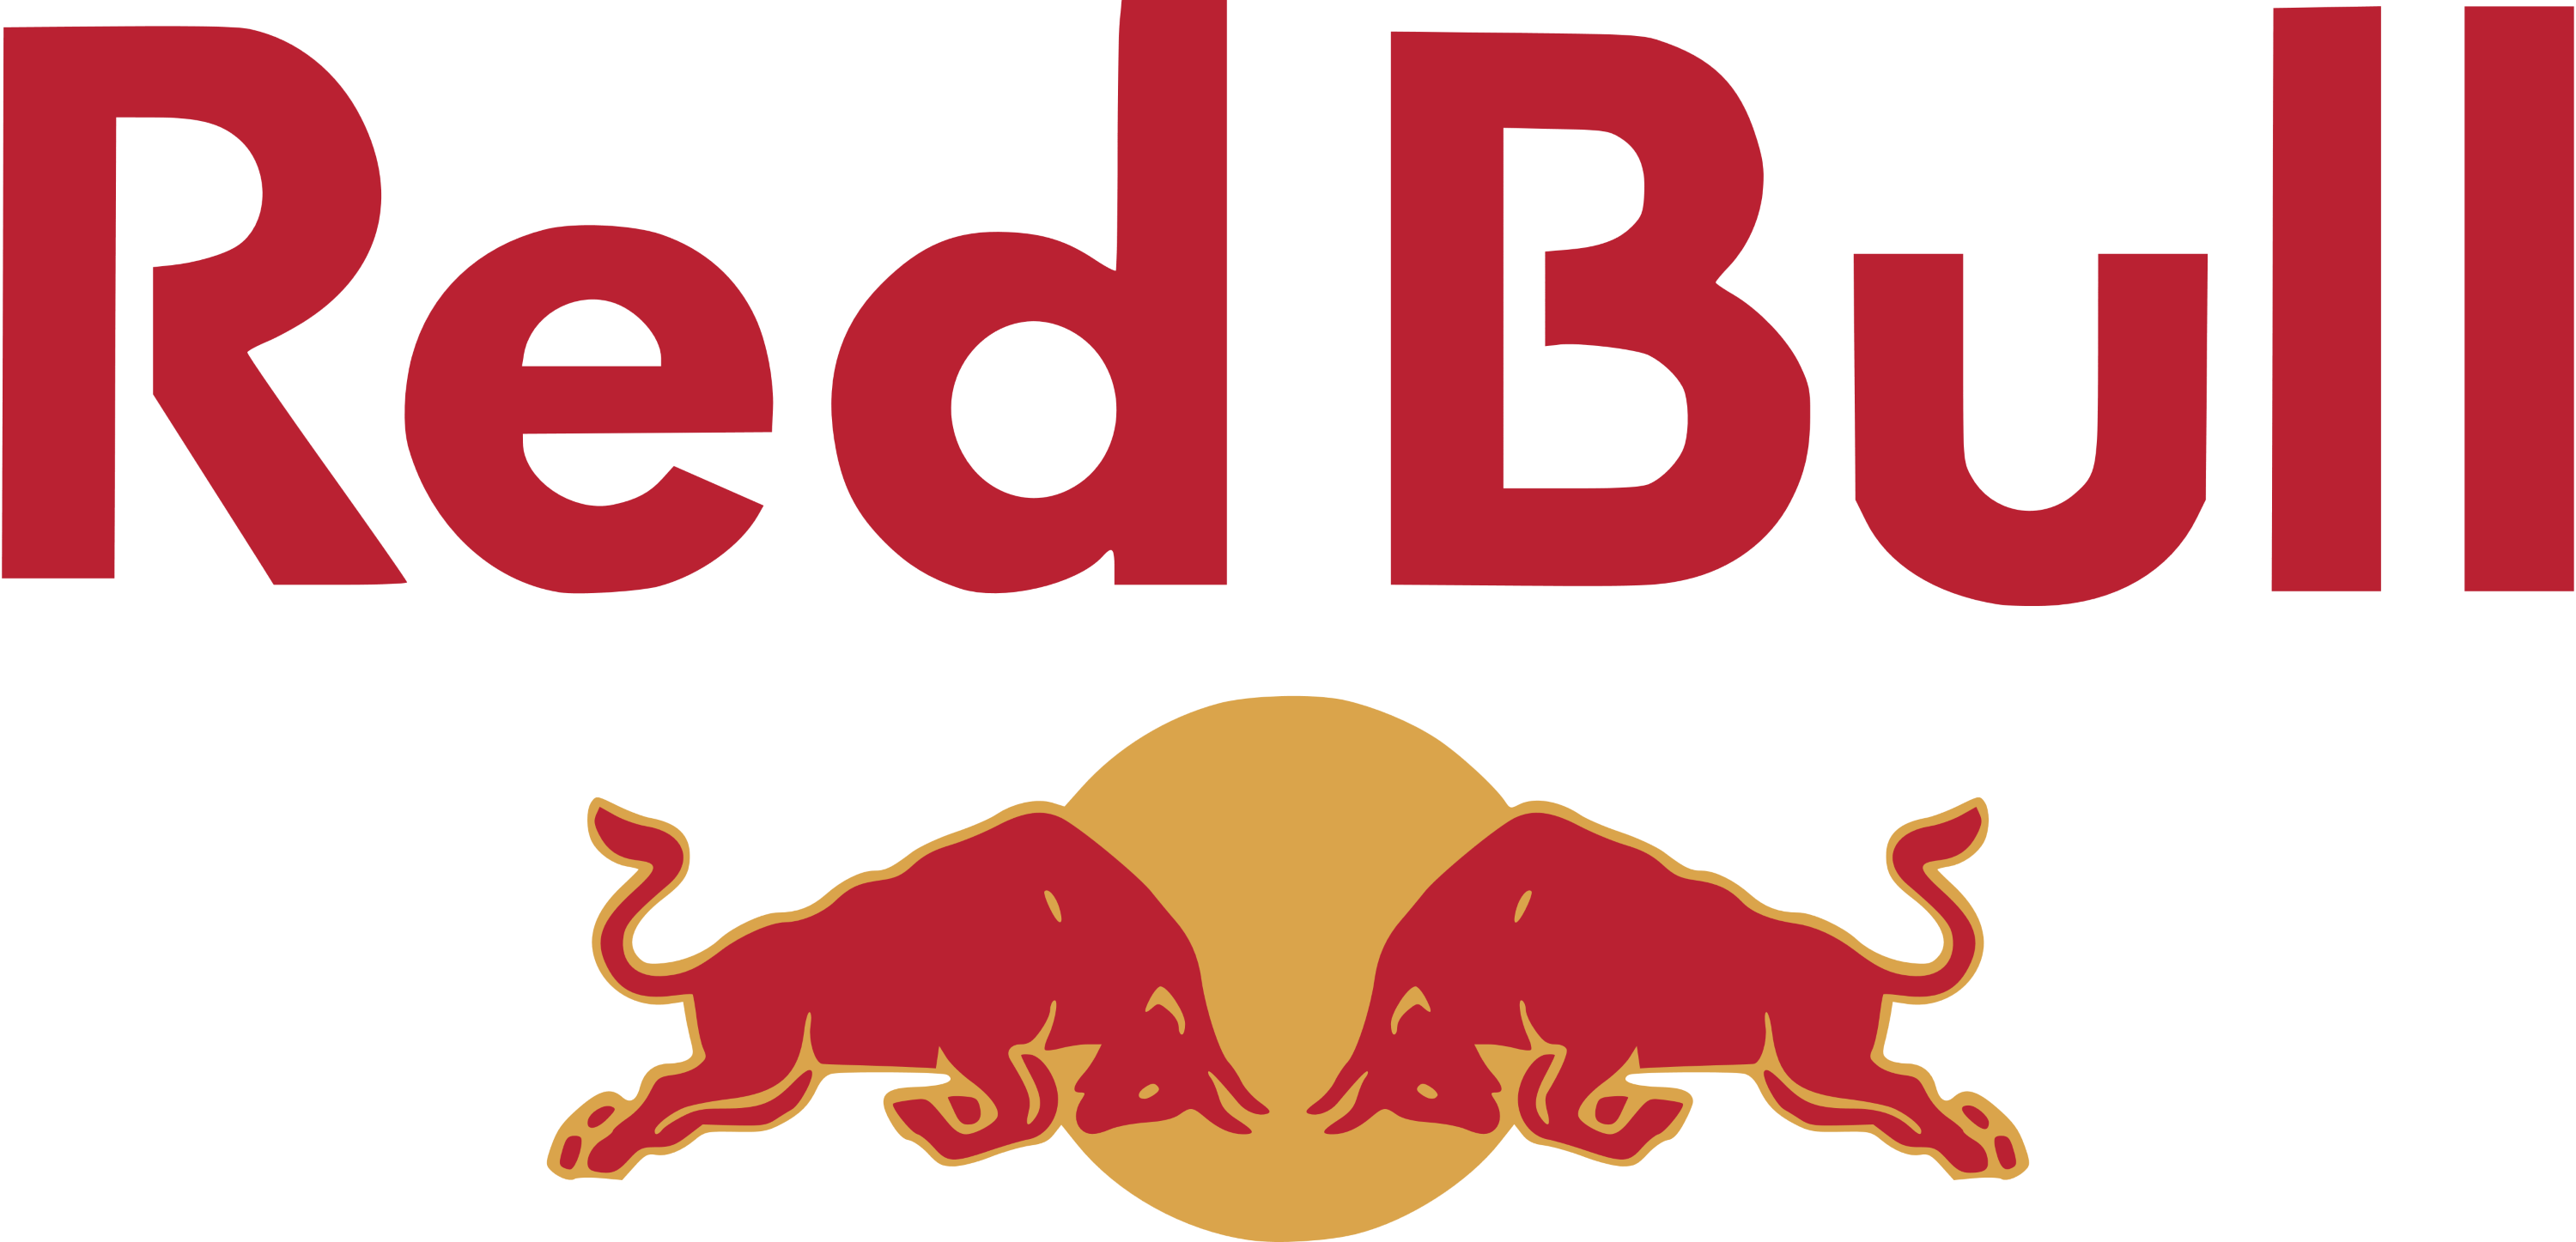 Red Word Logo - Red Bull – Logos Download